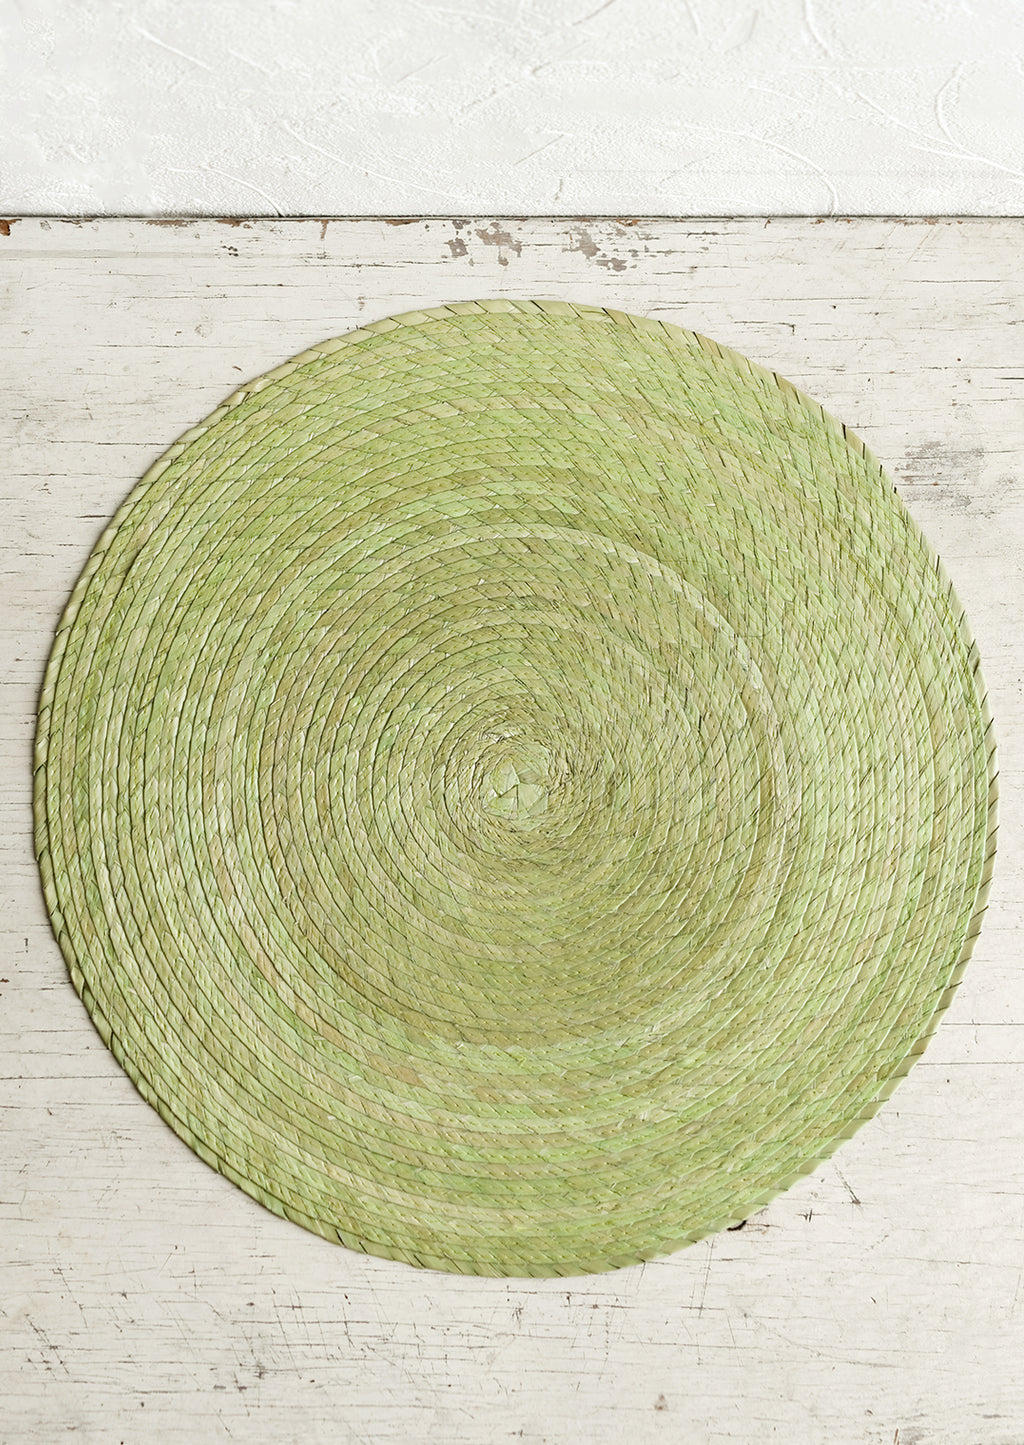 Pistachio: A round woven straw placemat in pistachio color.